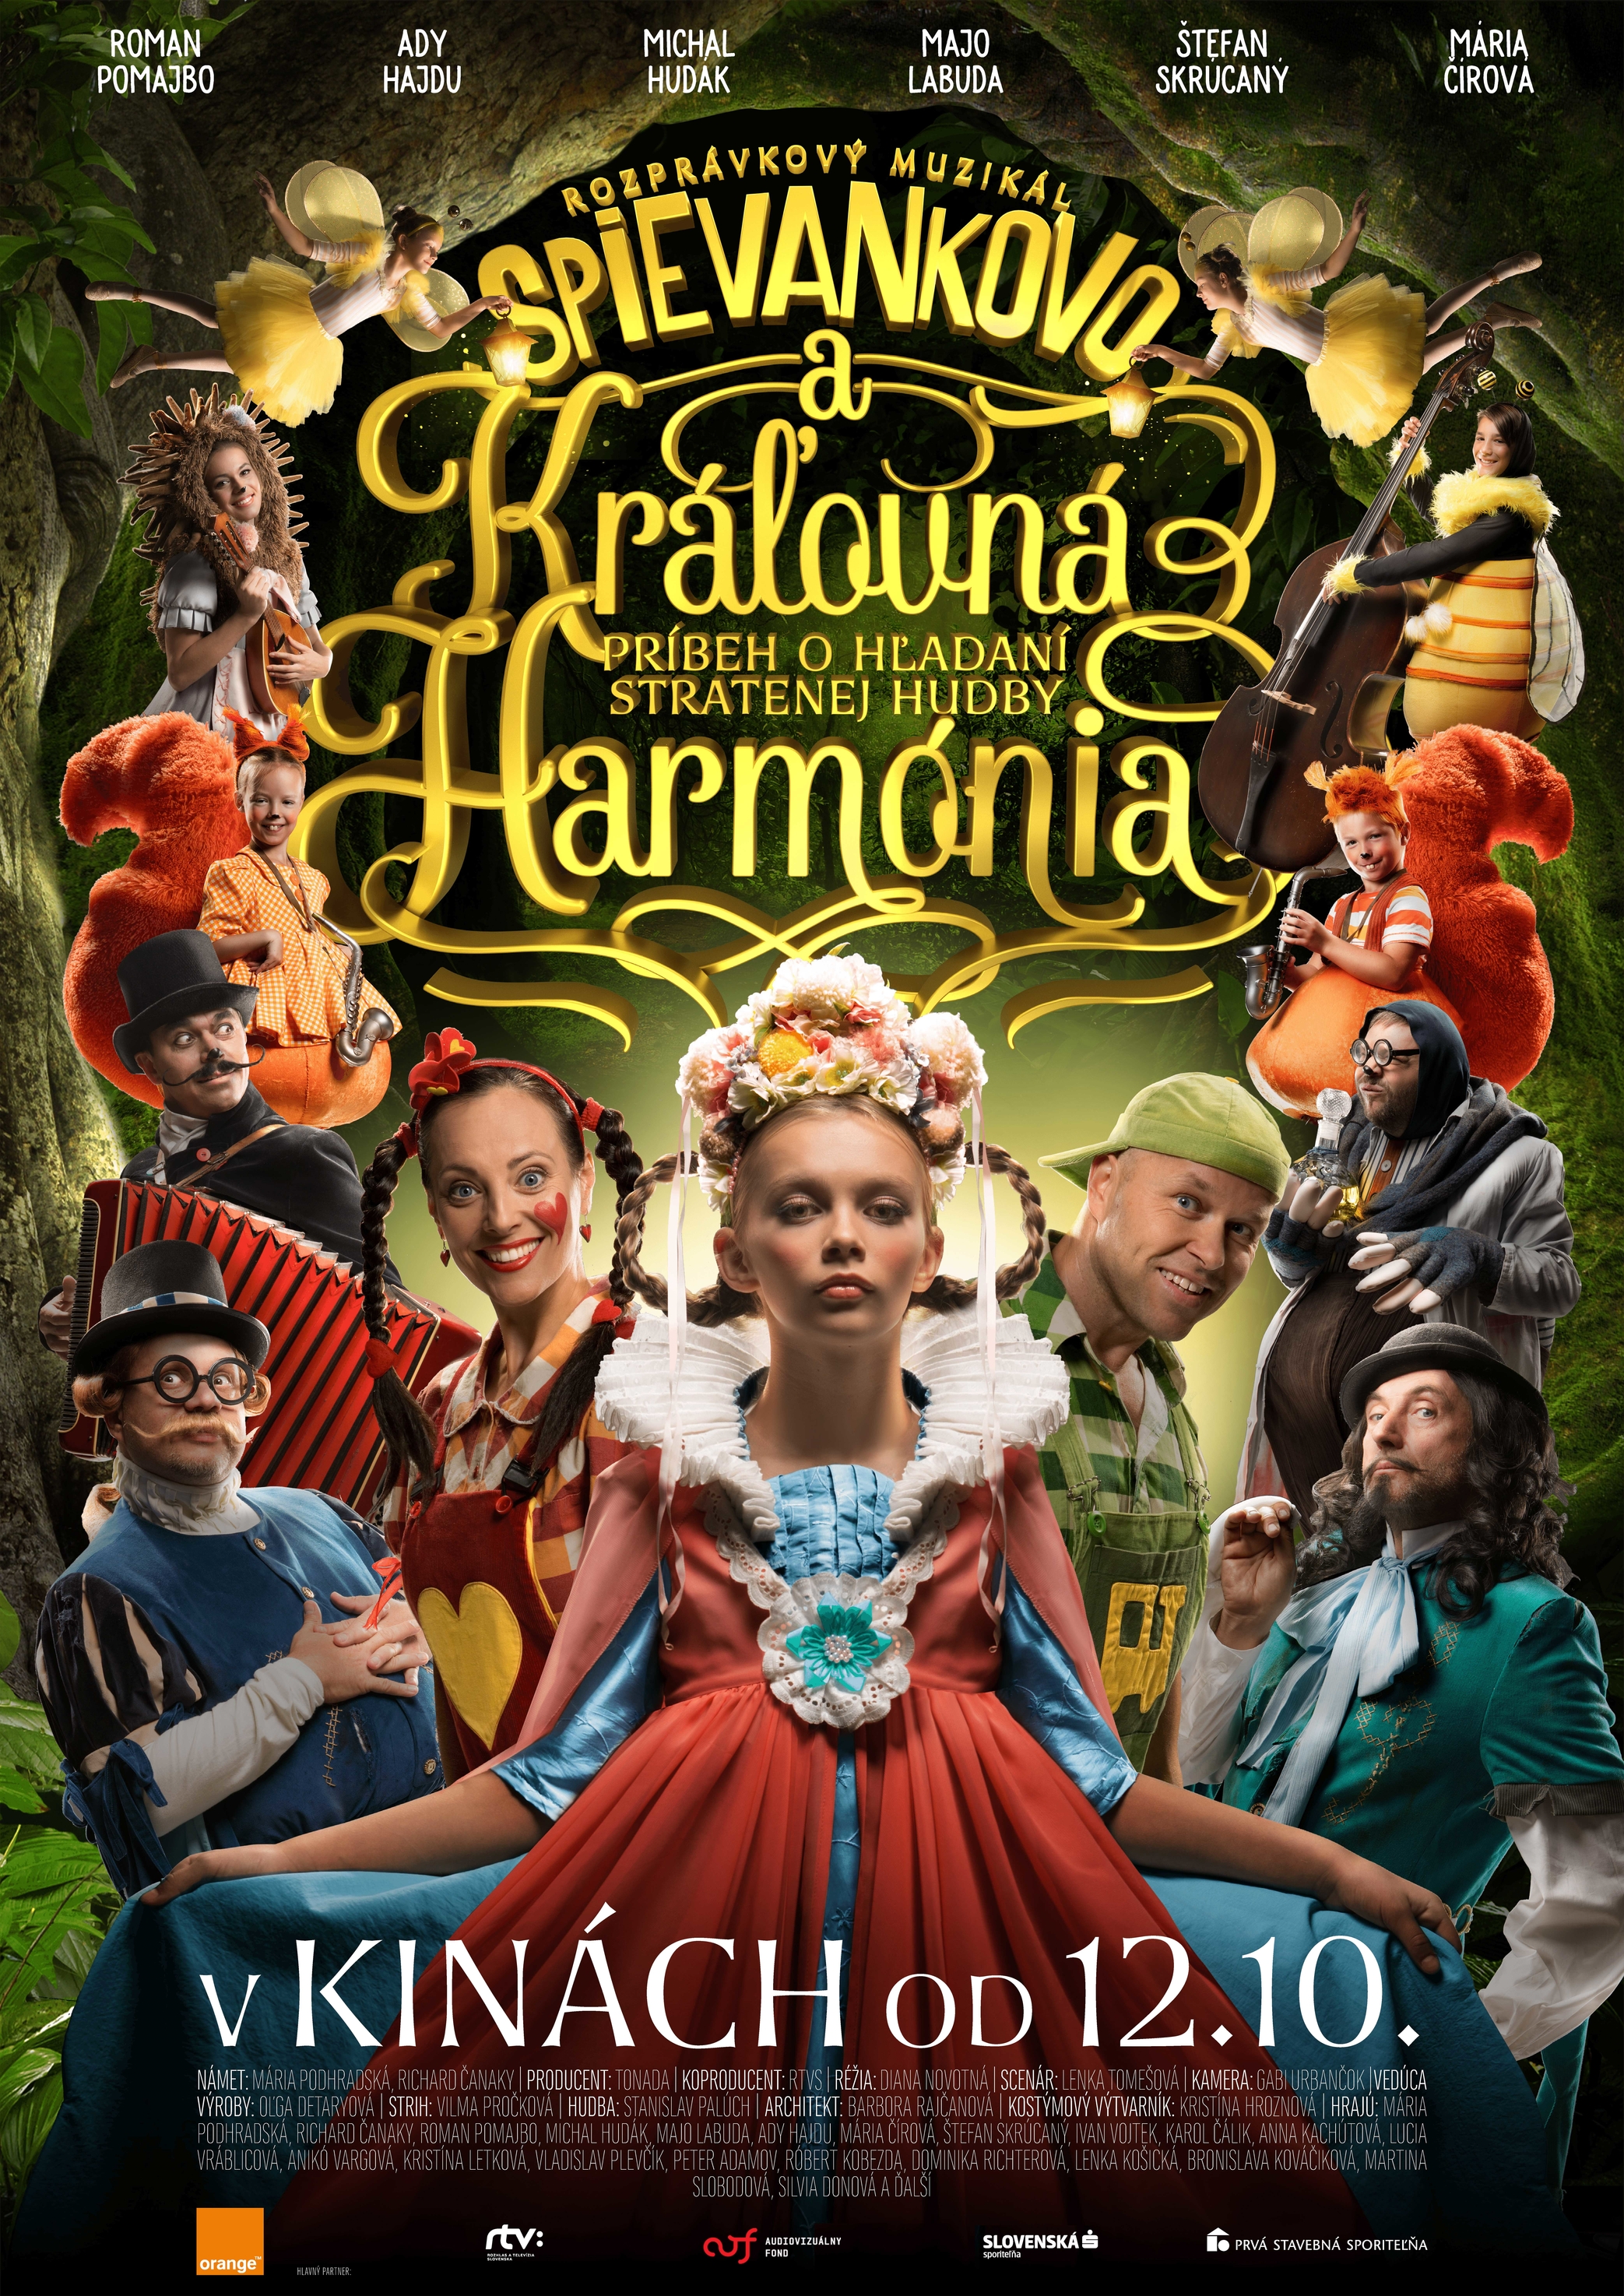 Spievankovo A Kralovna Harmonia Main Poster